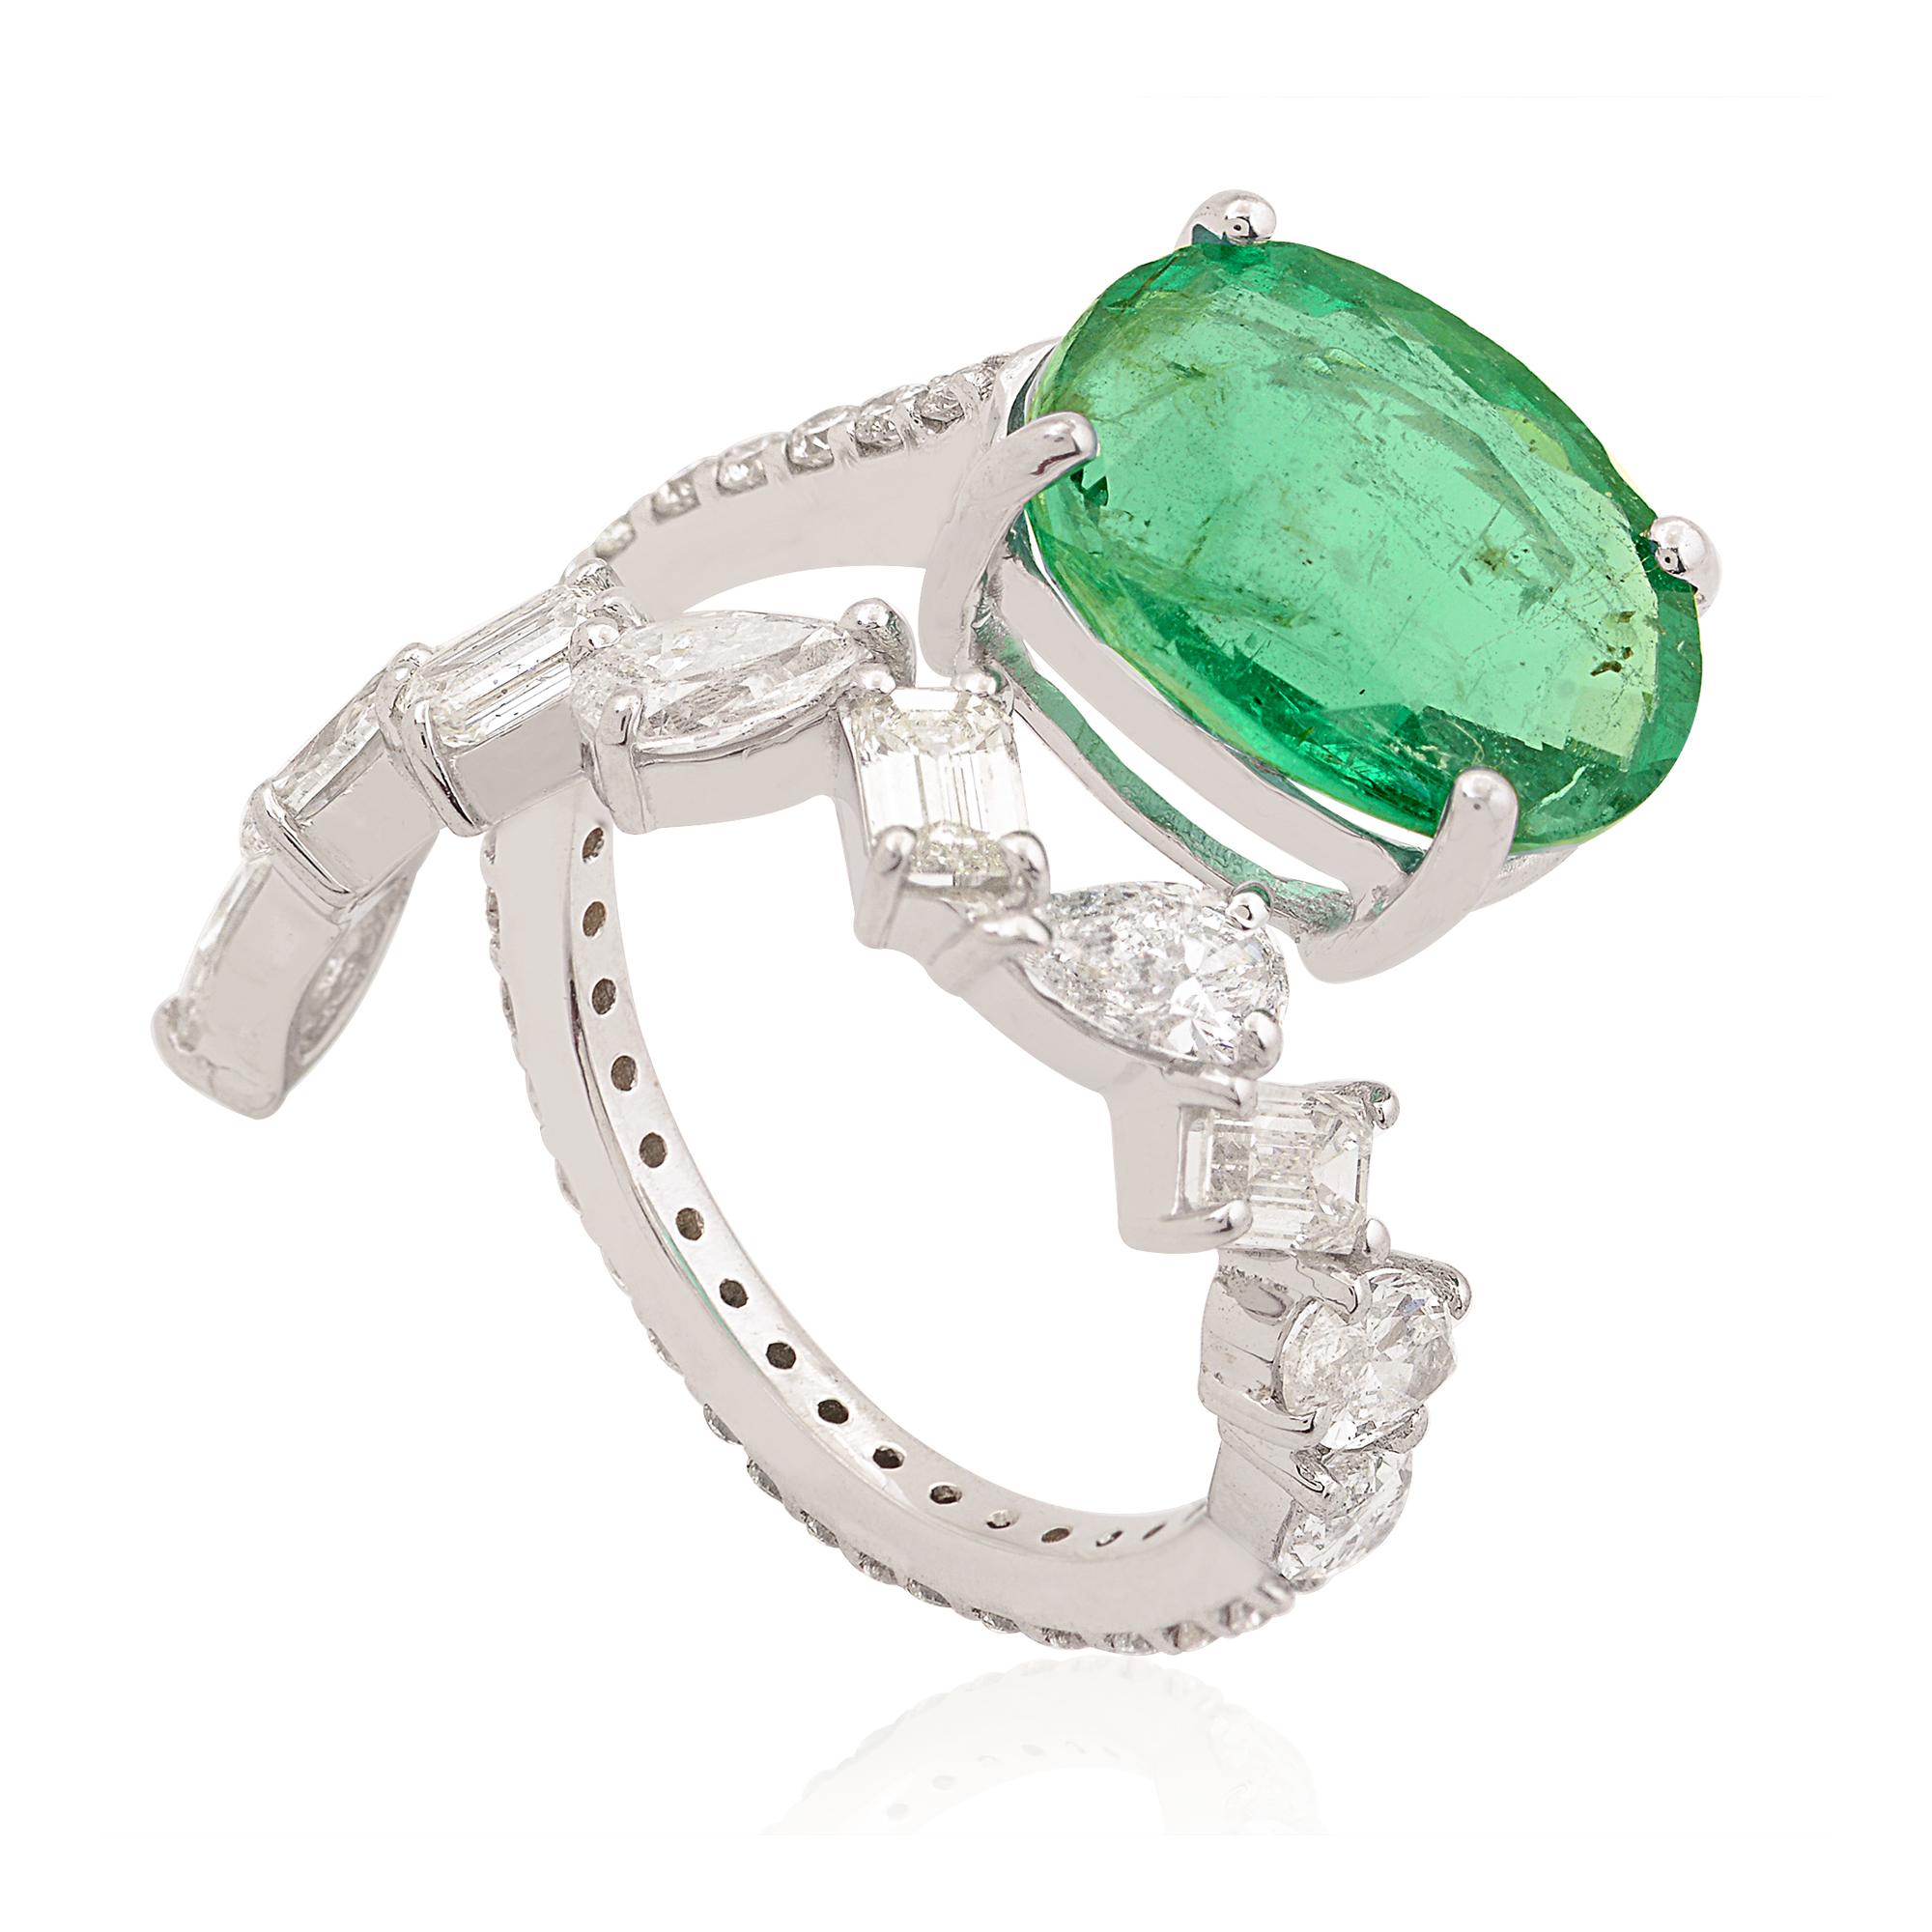 Oval Cut Oval Zambian Emerald Gemstone Wrap Ring Diamond 14 Karat White Gold Fine Jewelry For Sale